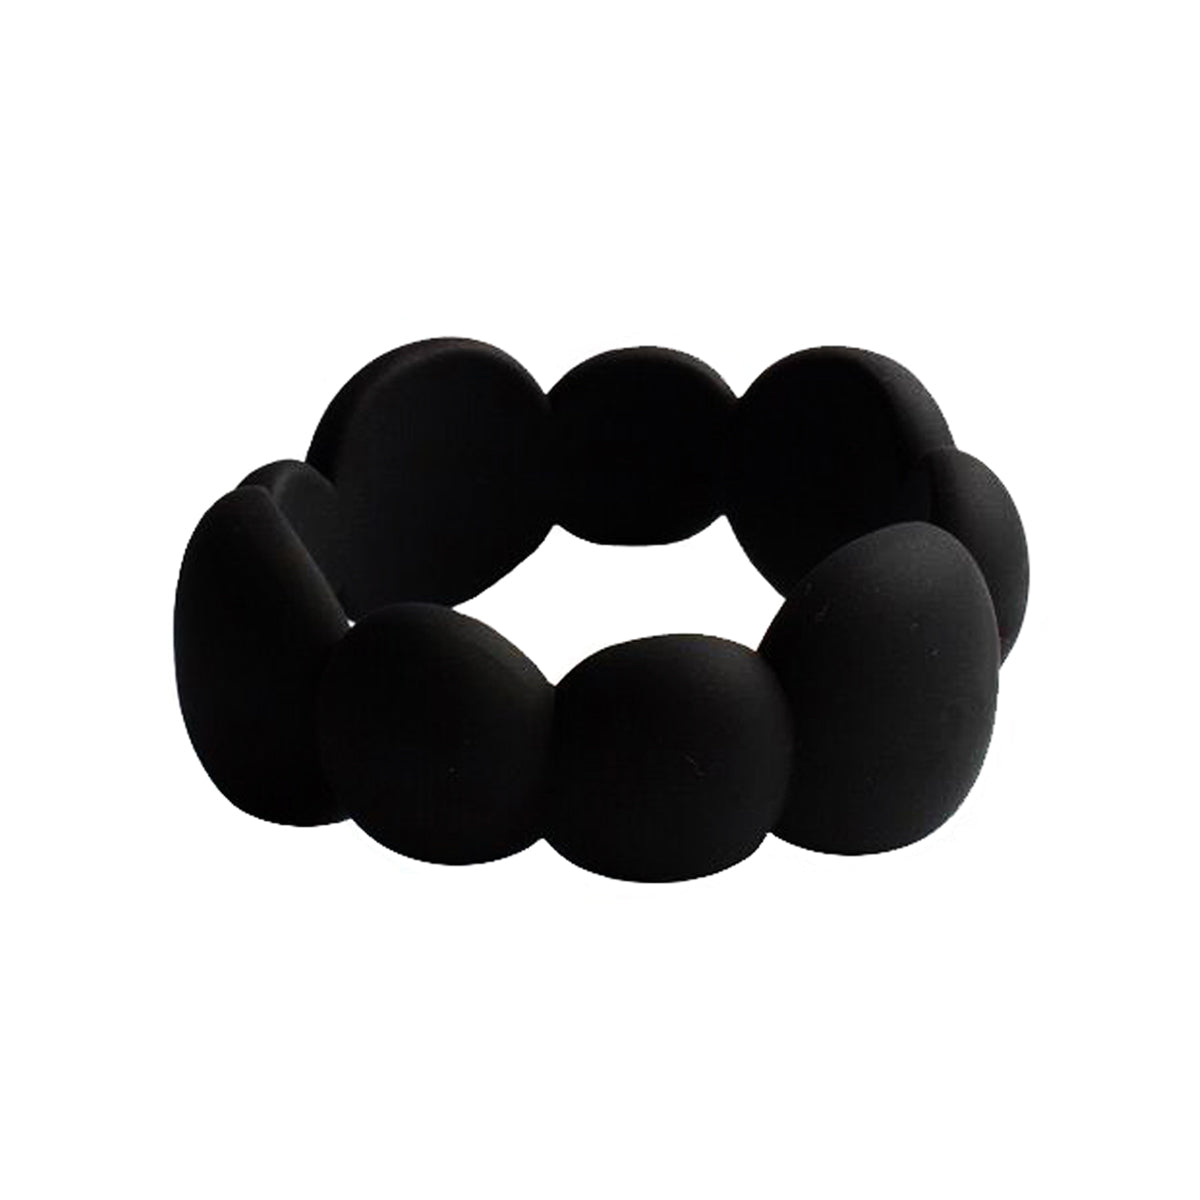 Jellystone Designs Pebble Bangle - Black